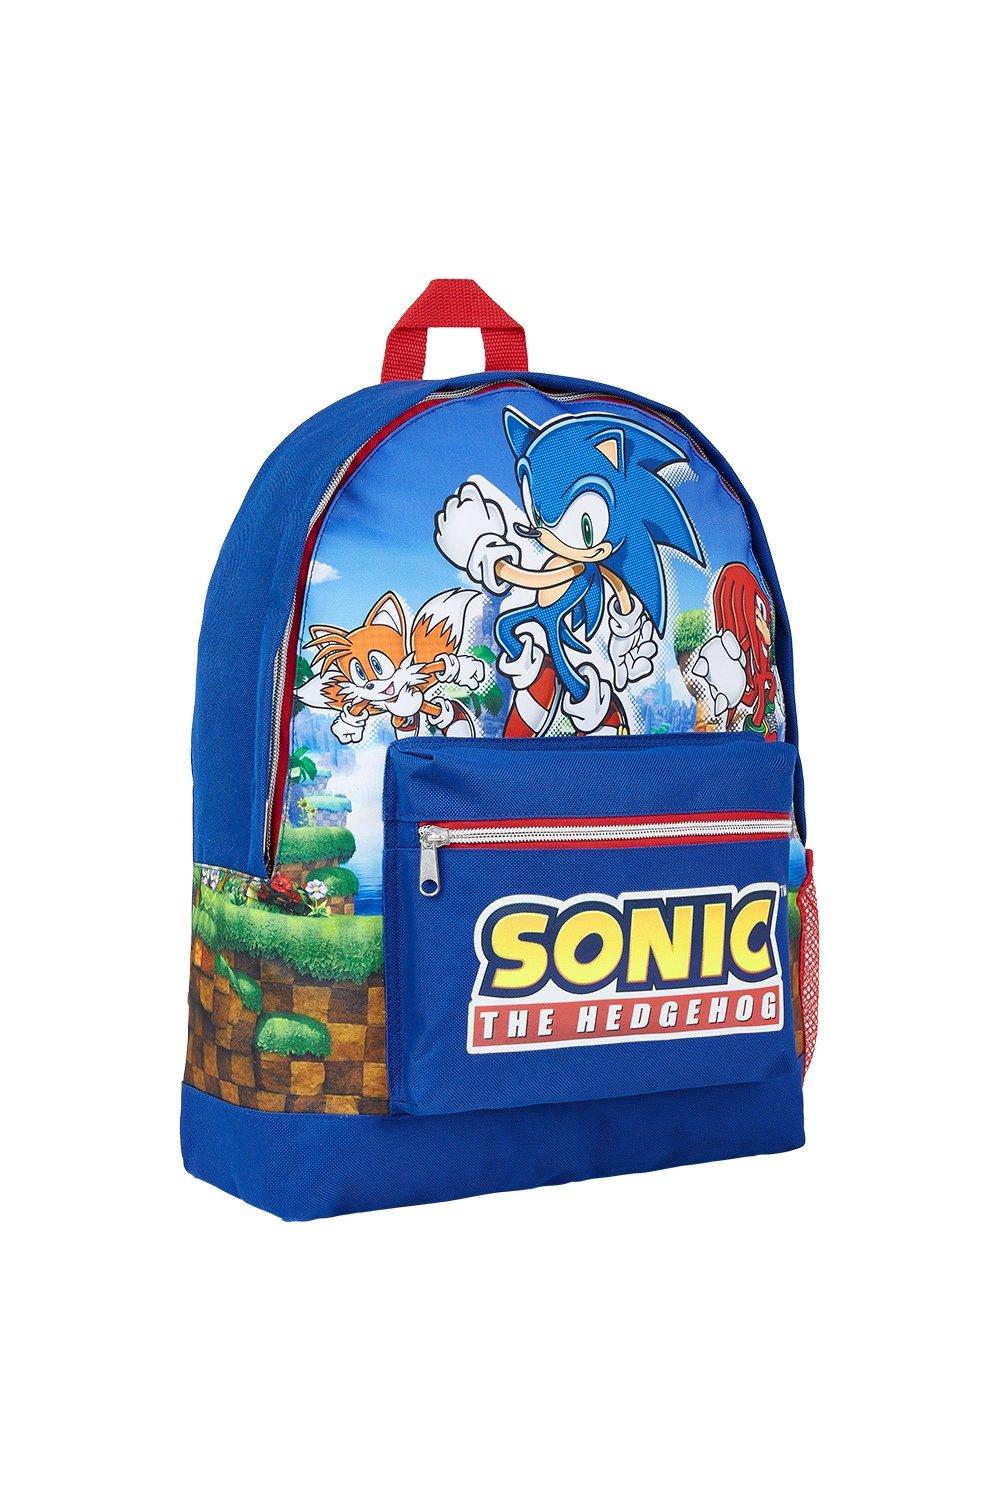 Рюкзак большой емкости Sonic the Hedgehog, синий neamedia icons sonic the hedgehog neic1